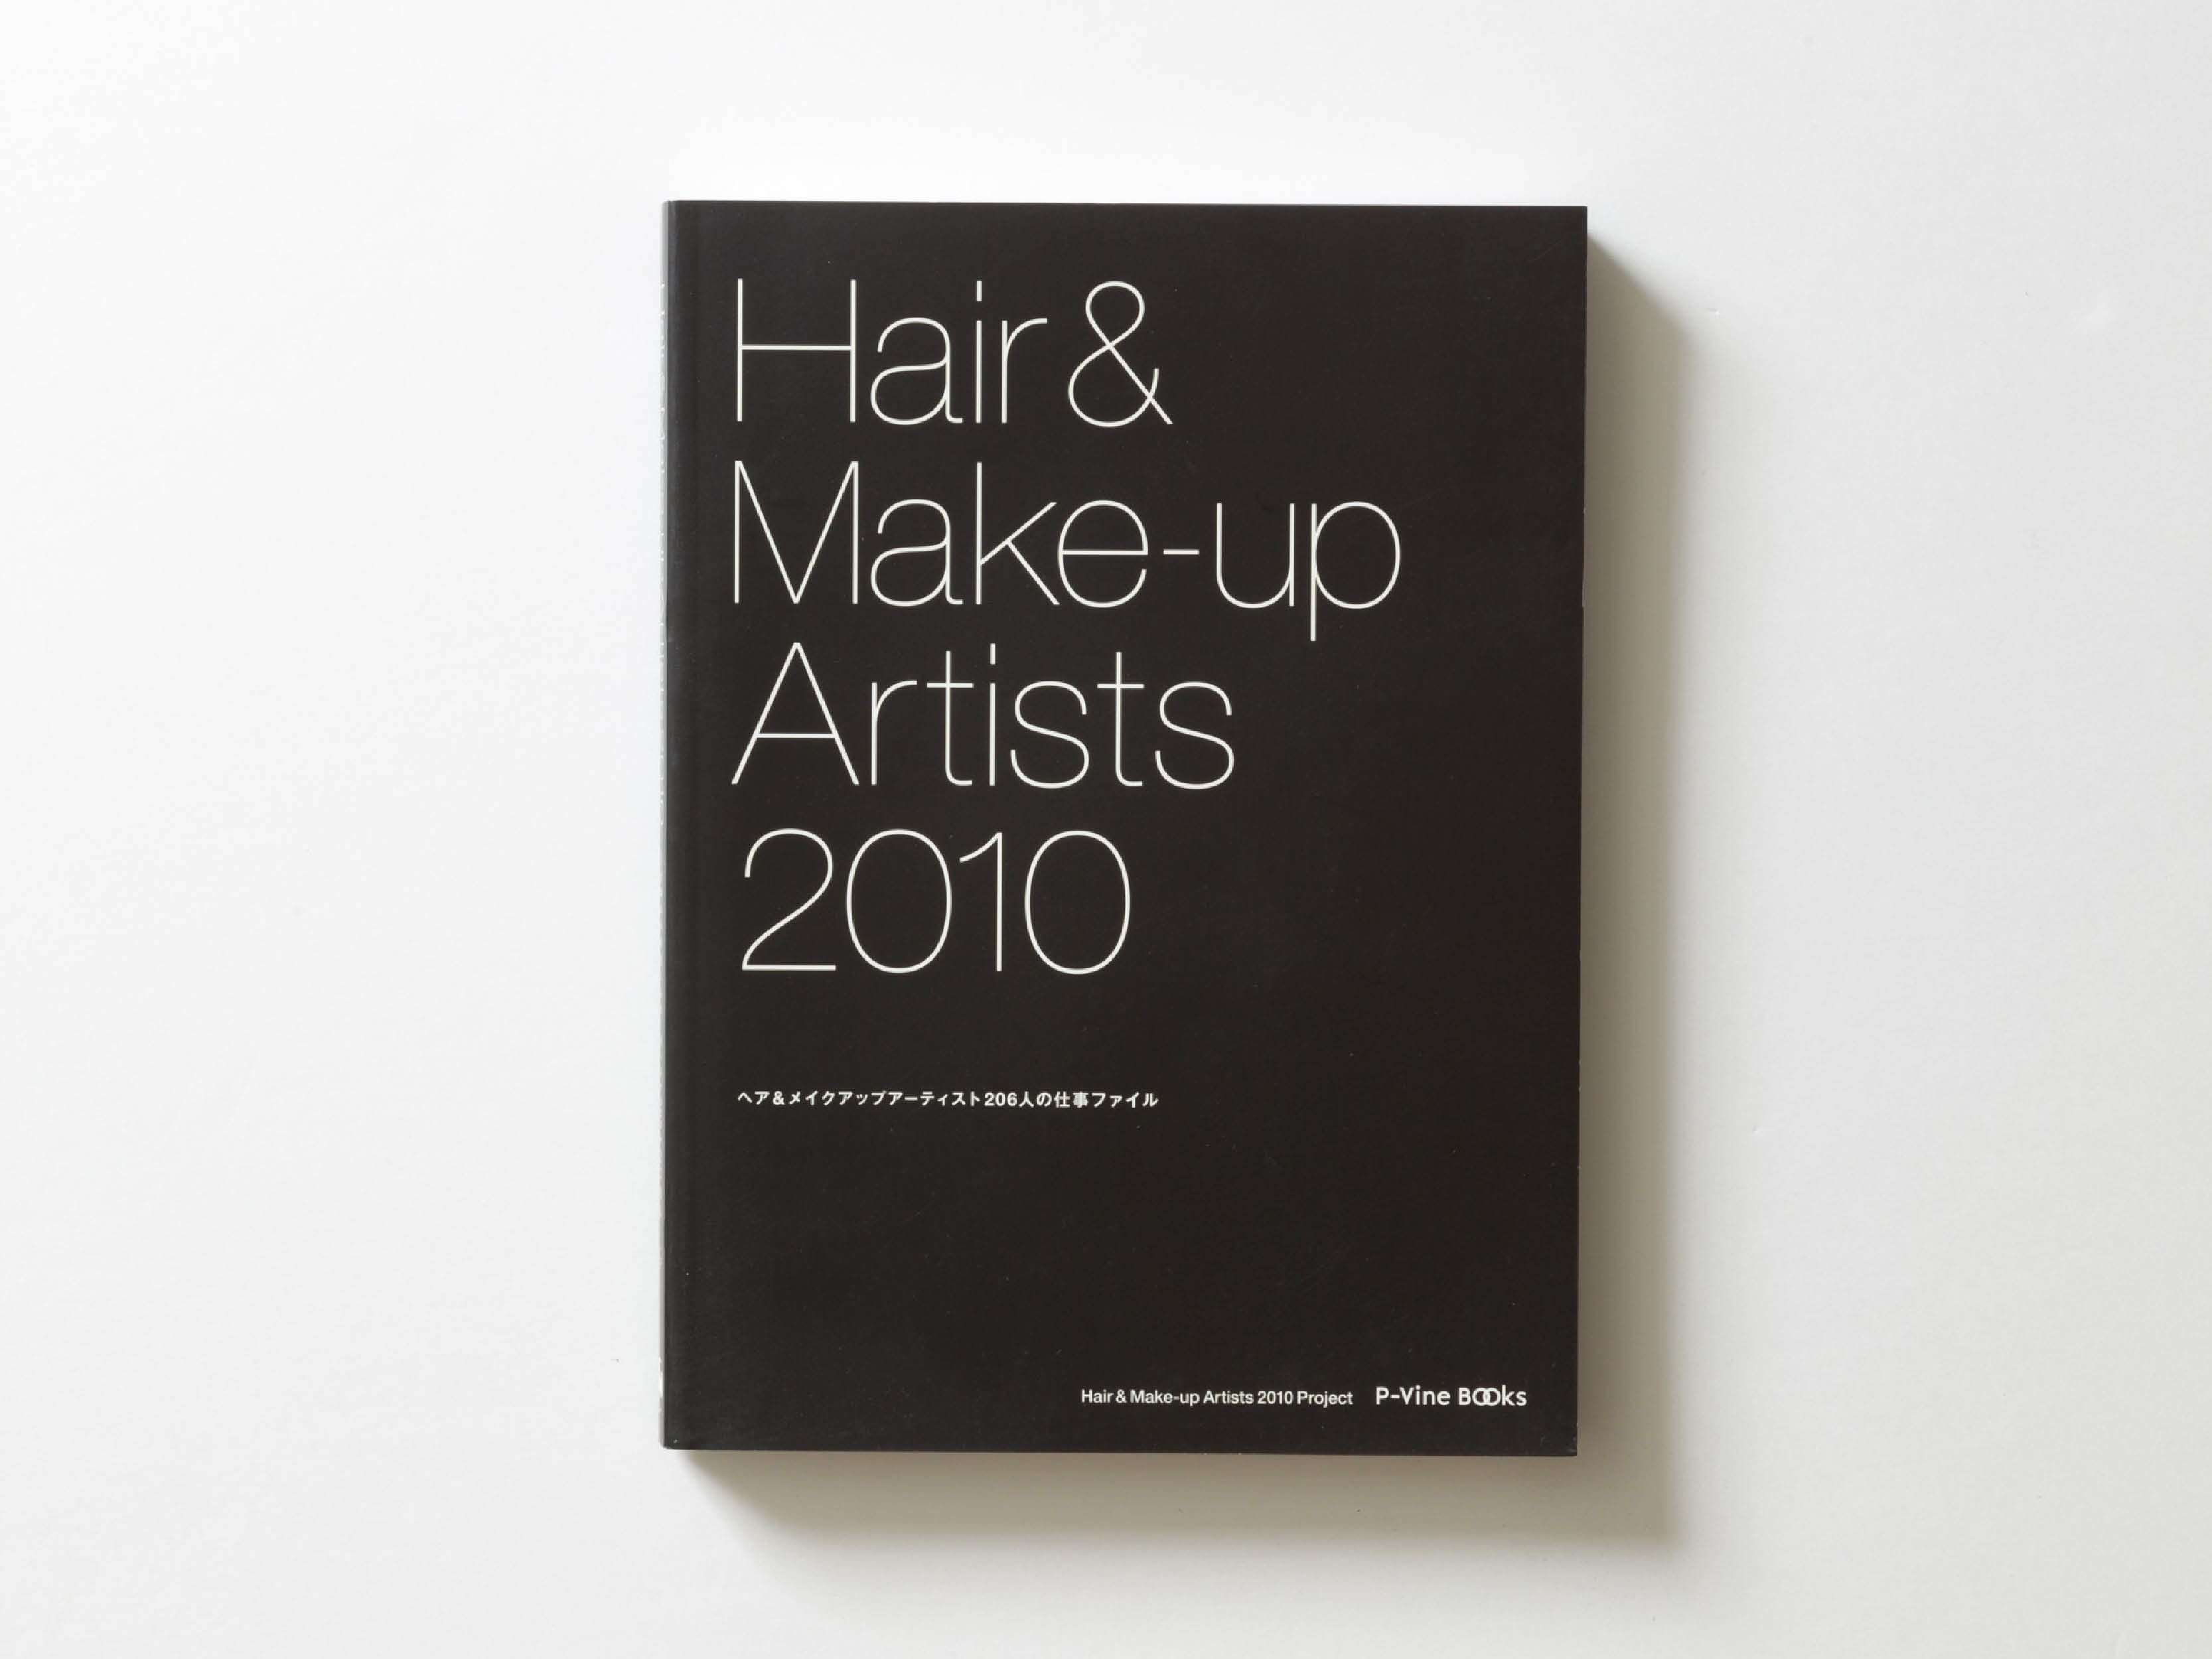 Hair & Make-up Artists 2010